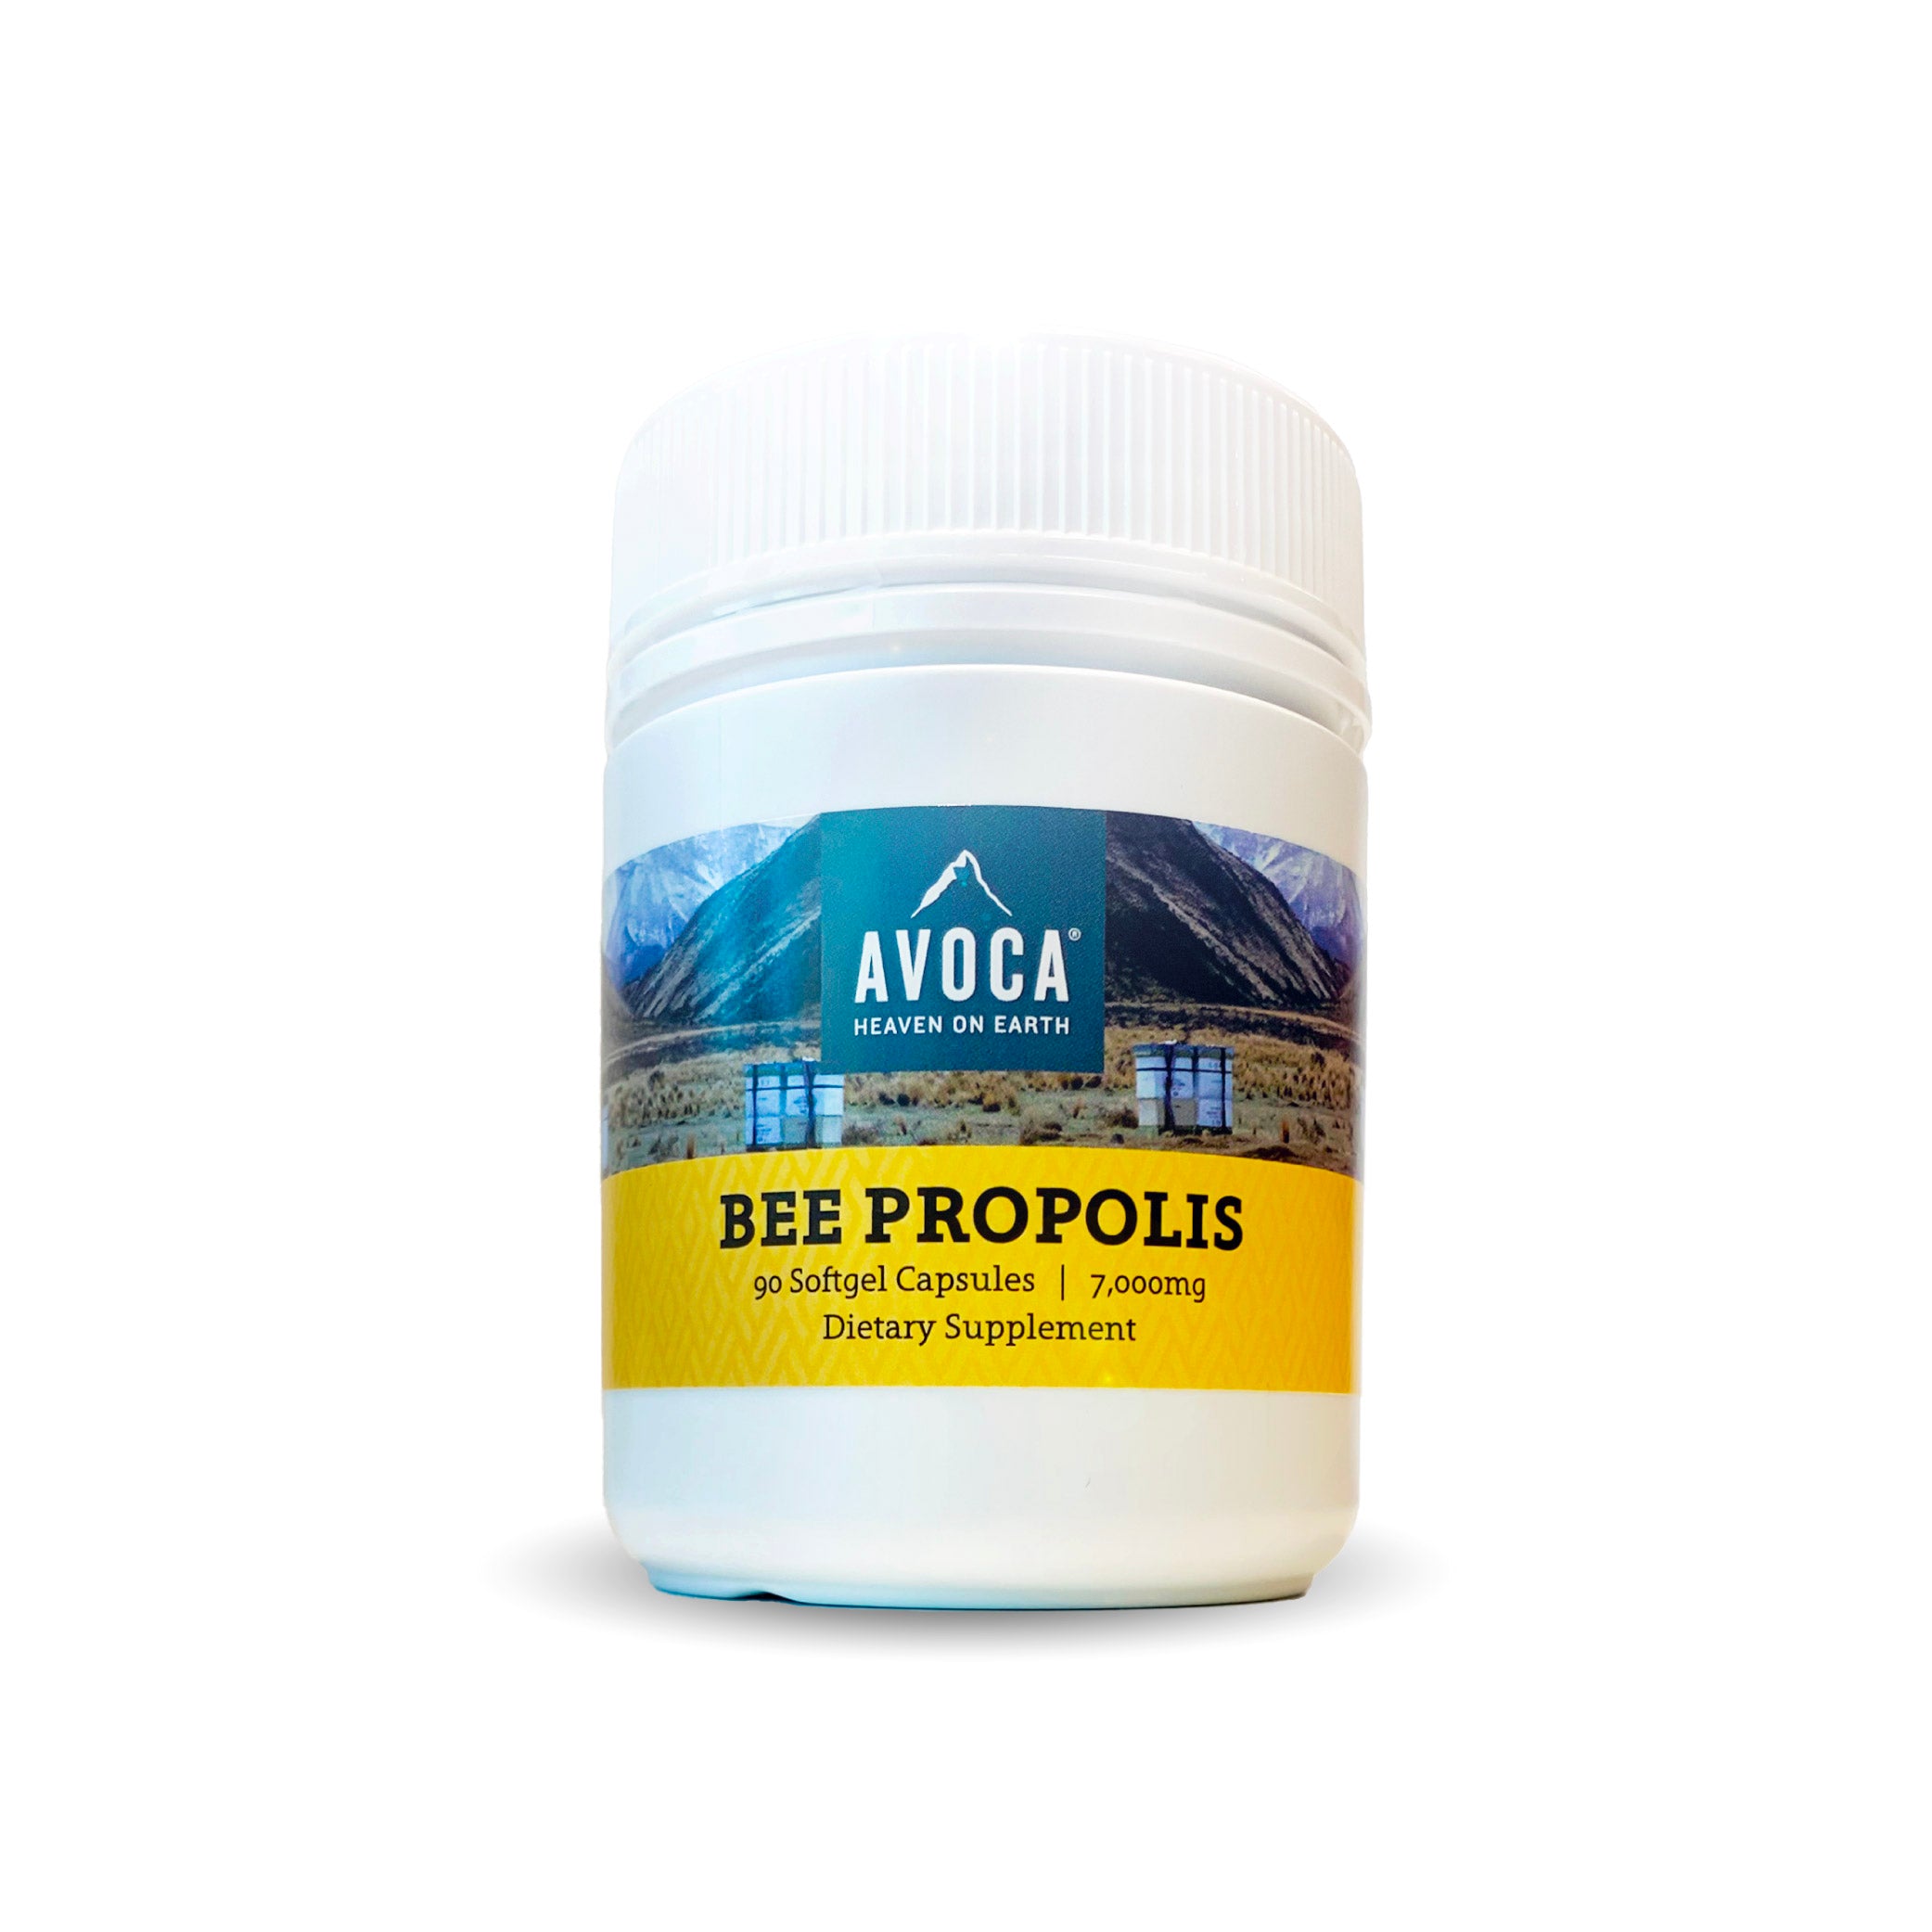 Buy 3 get 1 Free - Avoca Bee Propolis (90 x 7,000mg Capsules)